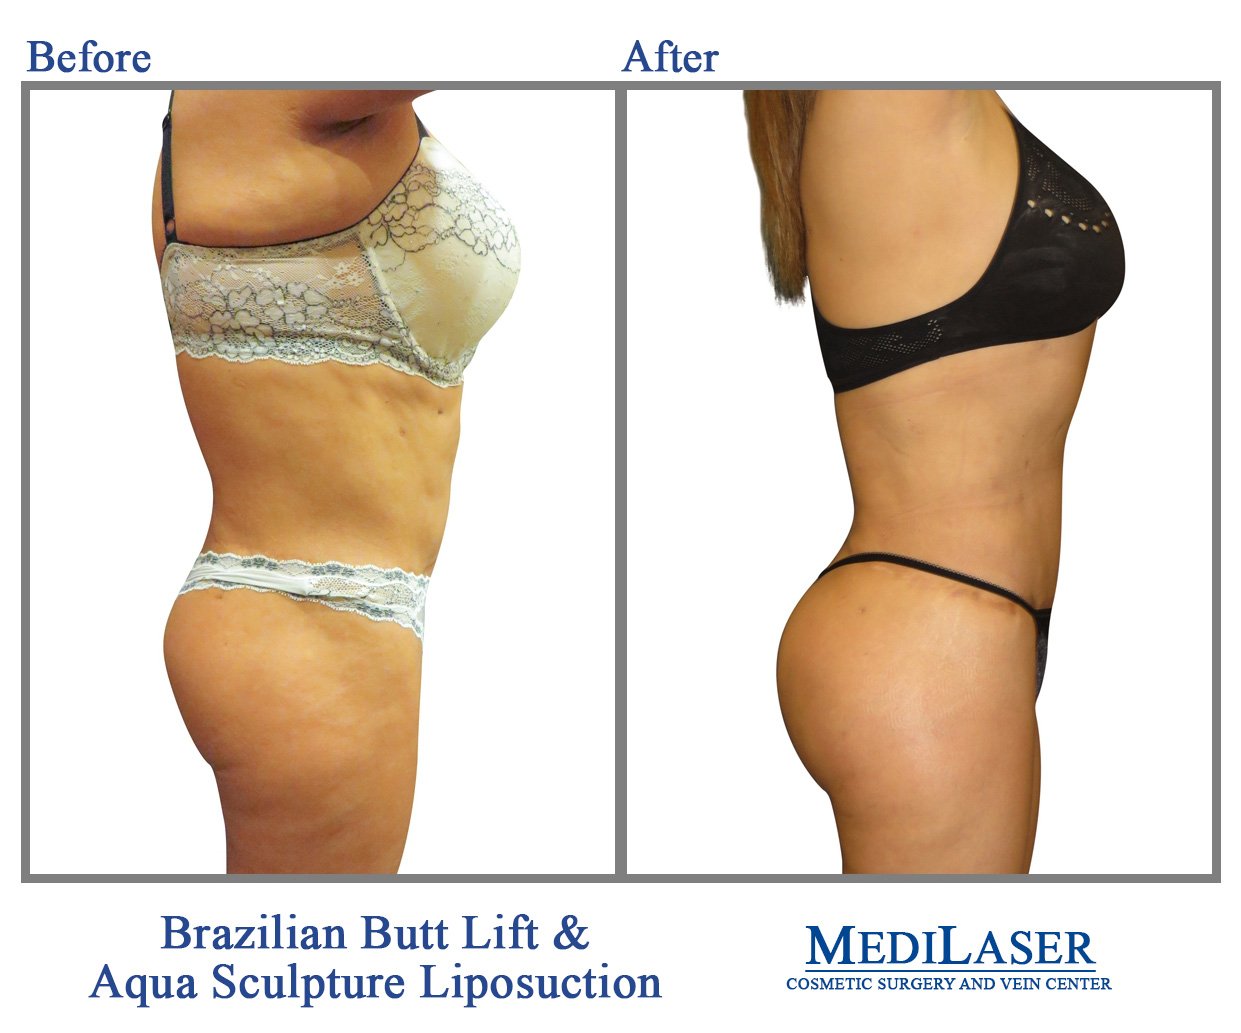 Brazilian Butt Lift BBL Before and After - Medilaser Surgery and Vein Center